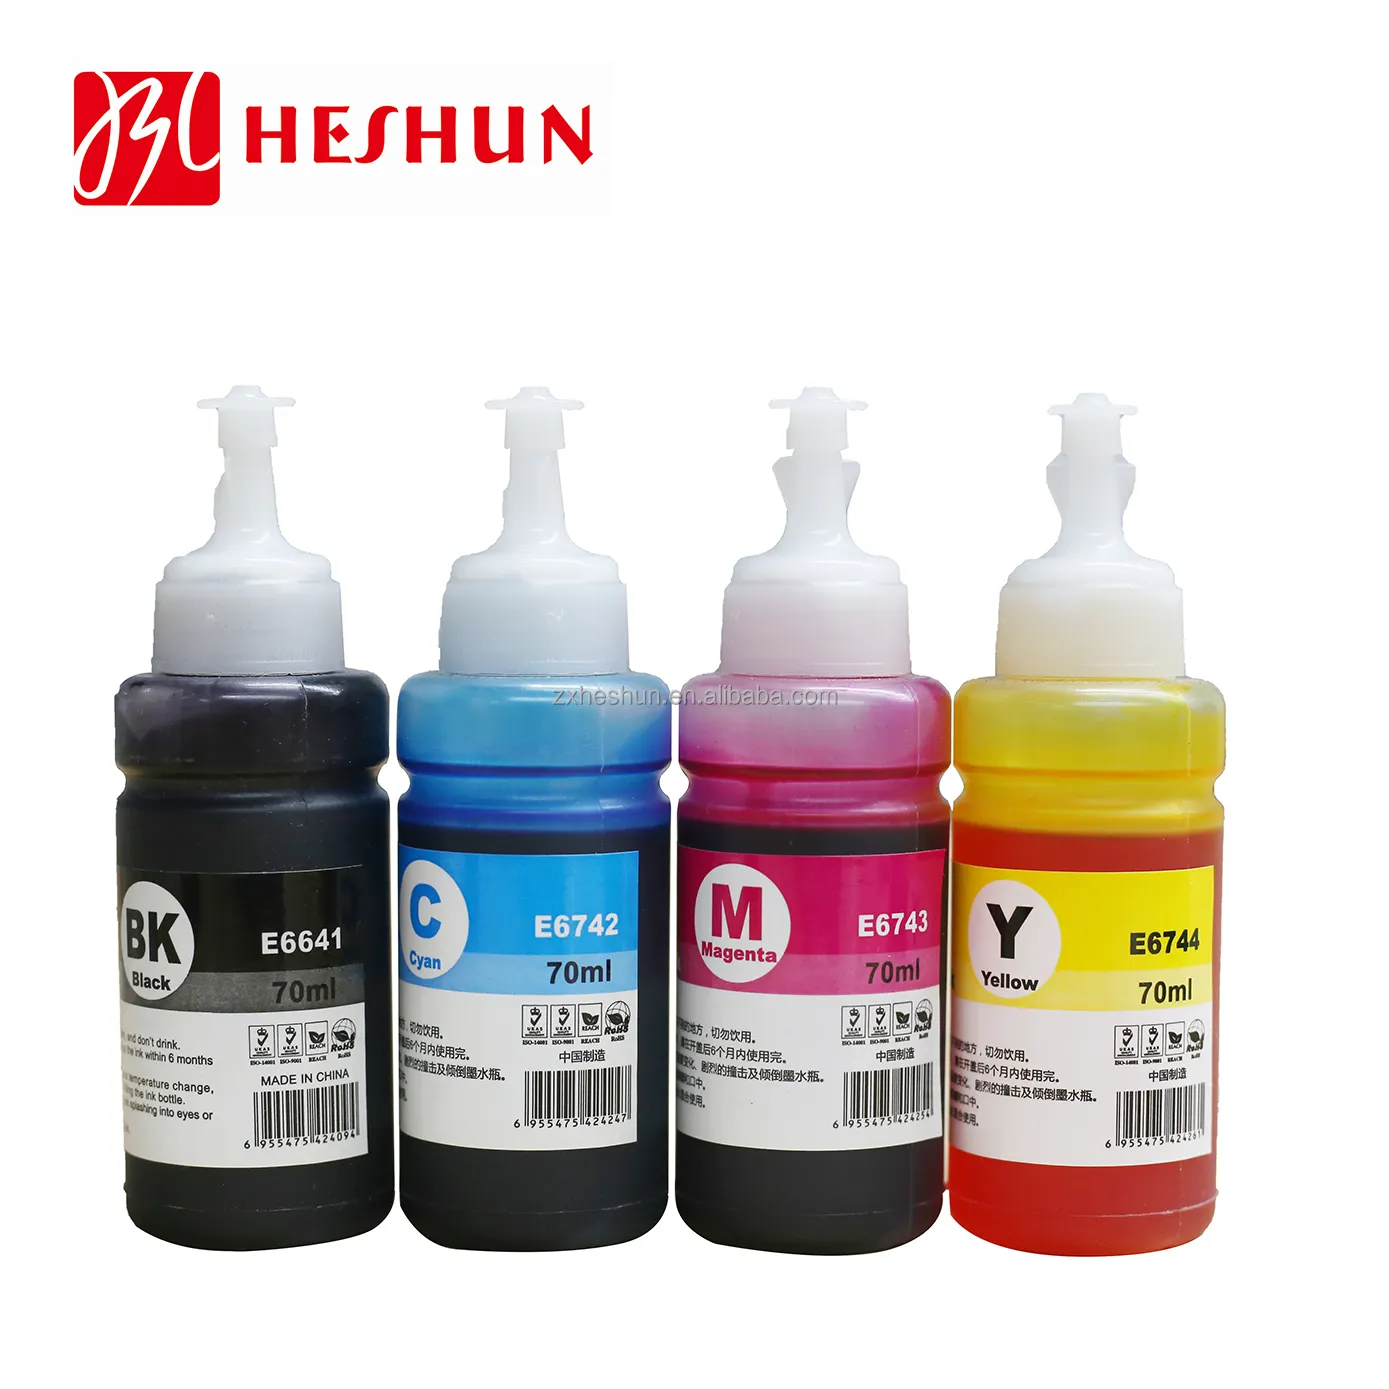 Heshun tinta pewarna isi ulang T6641-6644 botol 70ml Premium untuk Epson L110 200 210 300 350 355 550 555